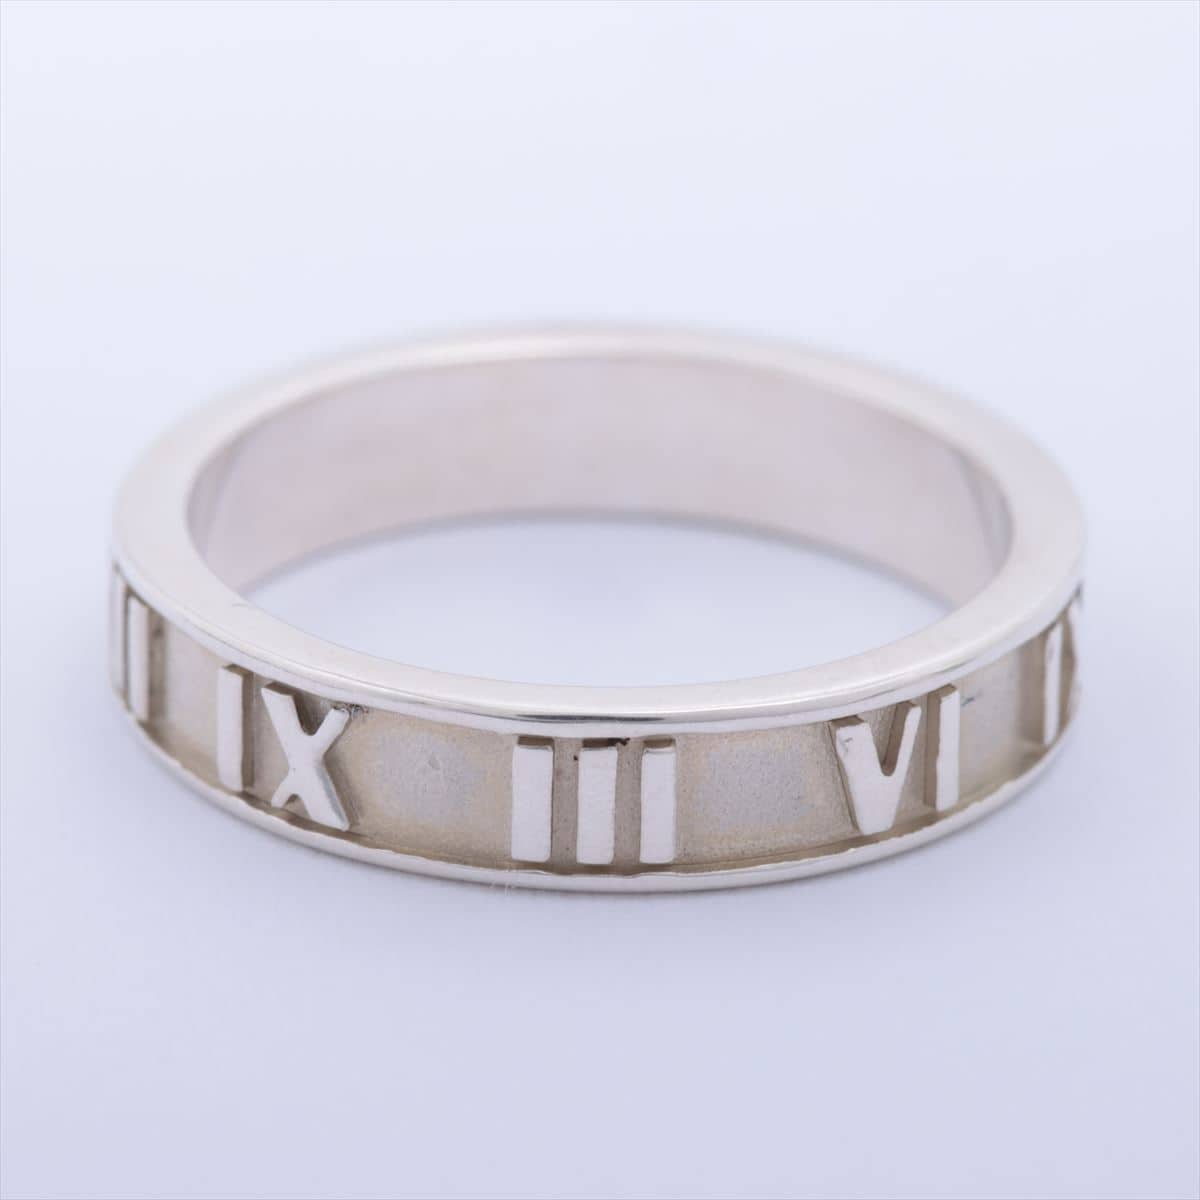 Tiffany Atlas Ring rings 925 2.9g Silver